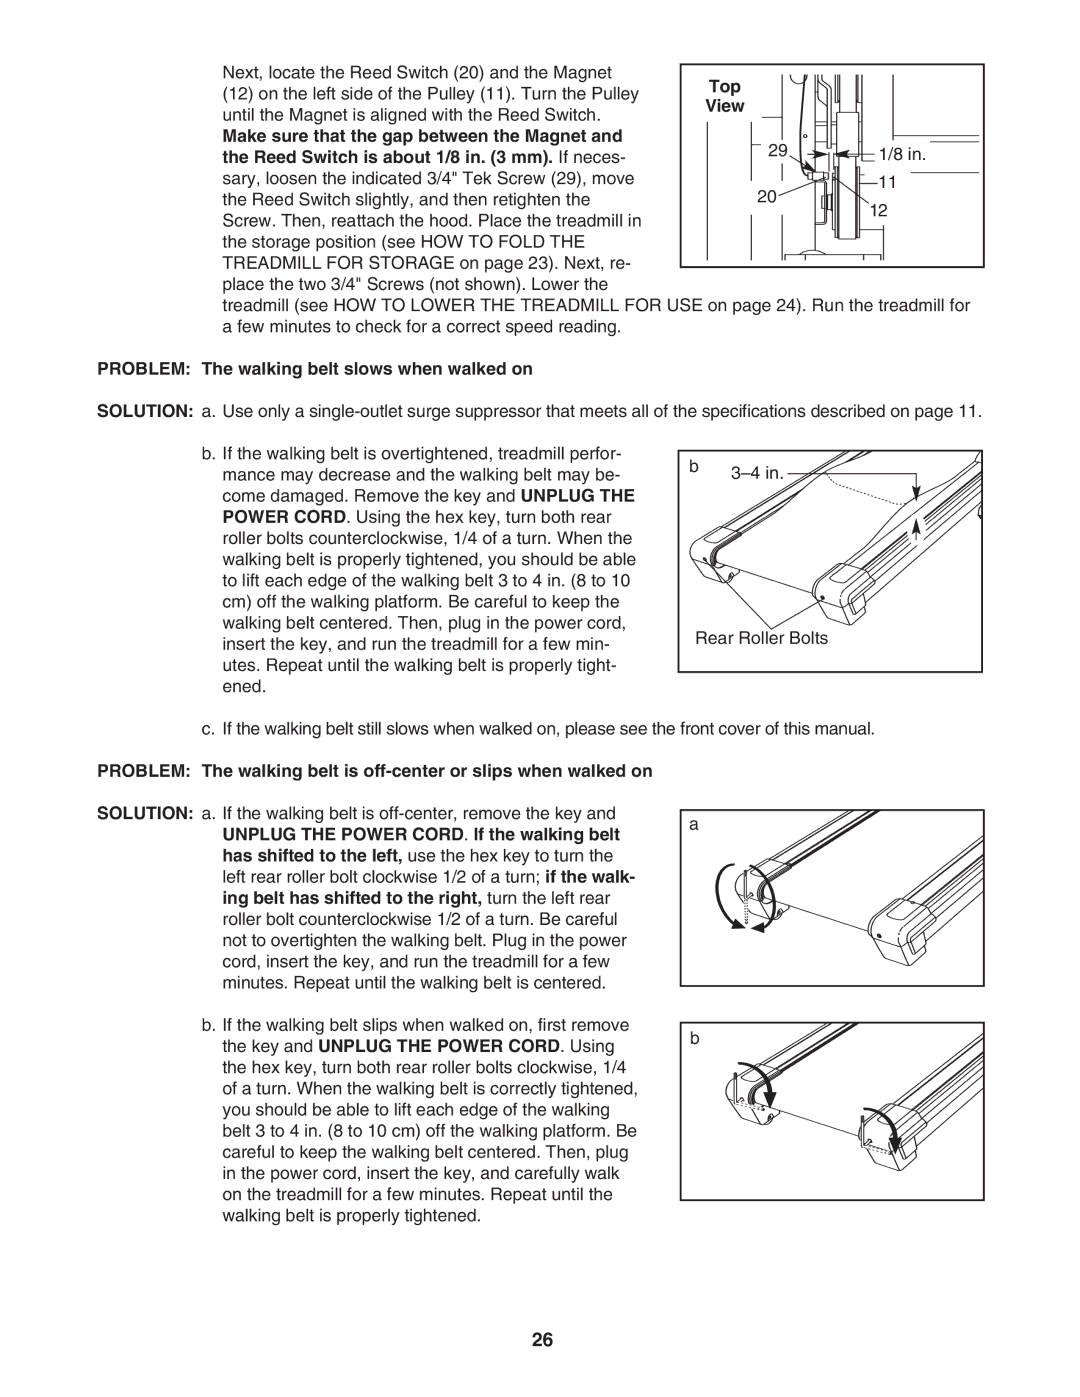 NordicTrack NTL15007.0 user manual Top, Problem The walking belt slows when walked on 